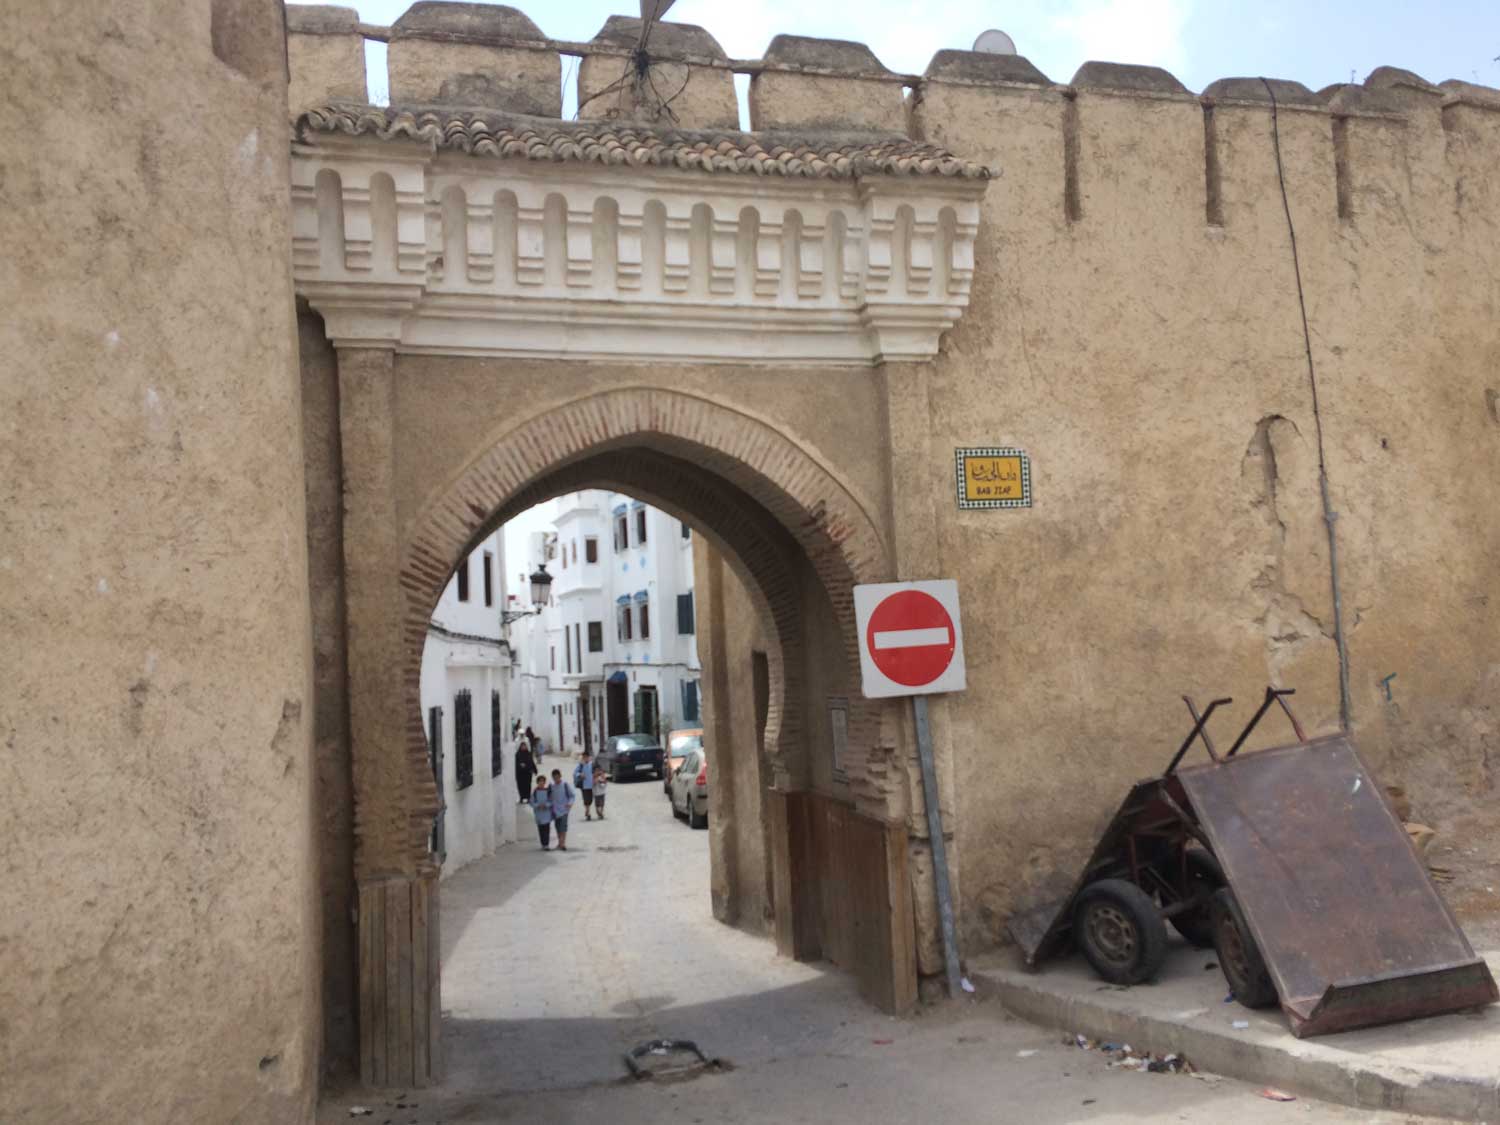 View of a medina gate